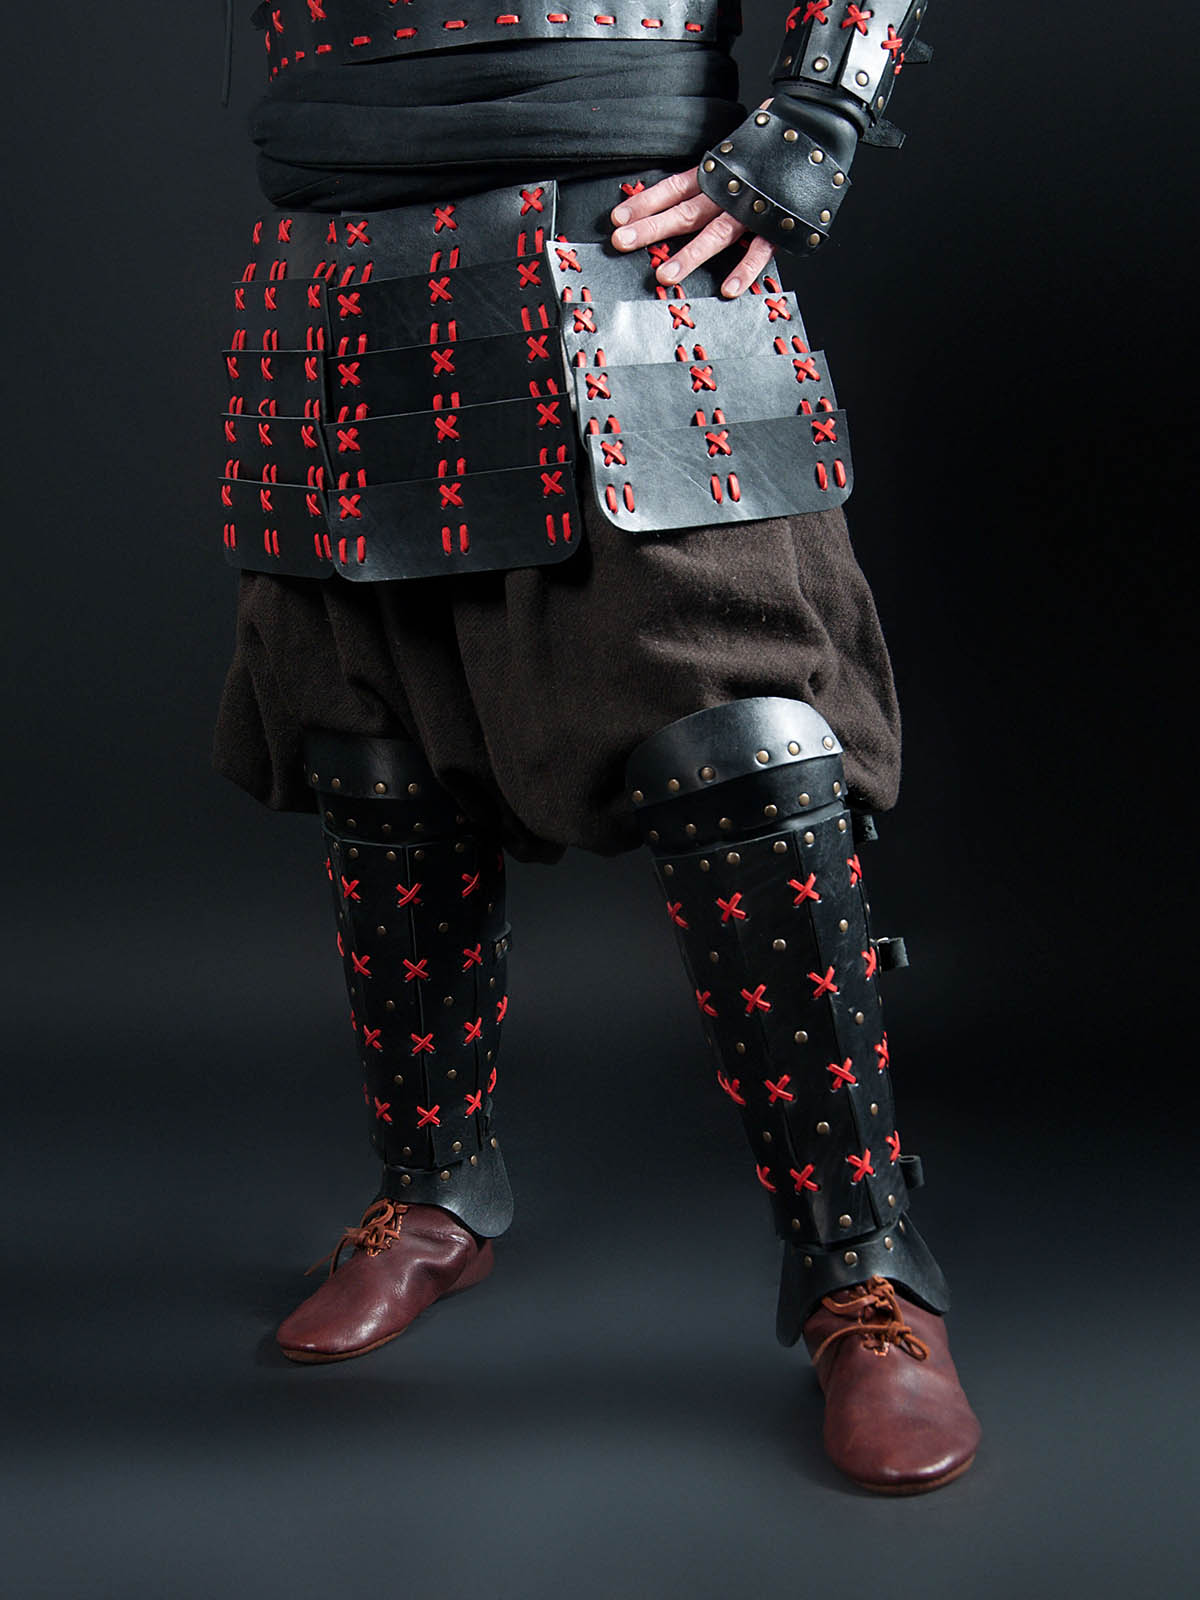 O Yoroi Japanese samurai leather warrior armor set for ...